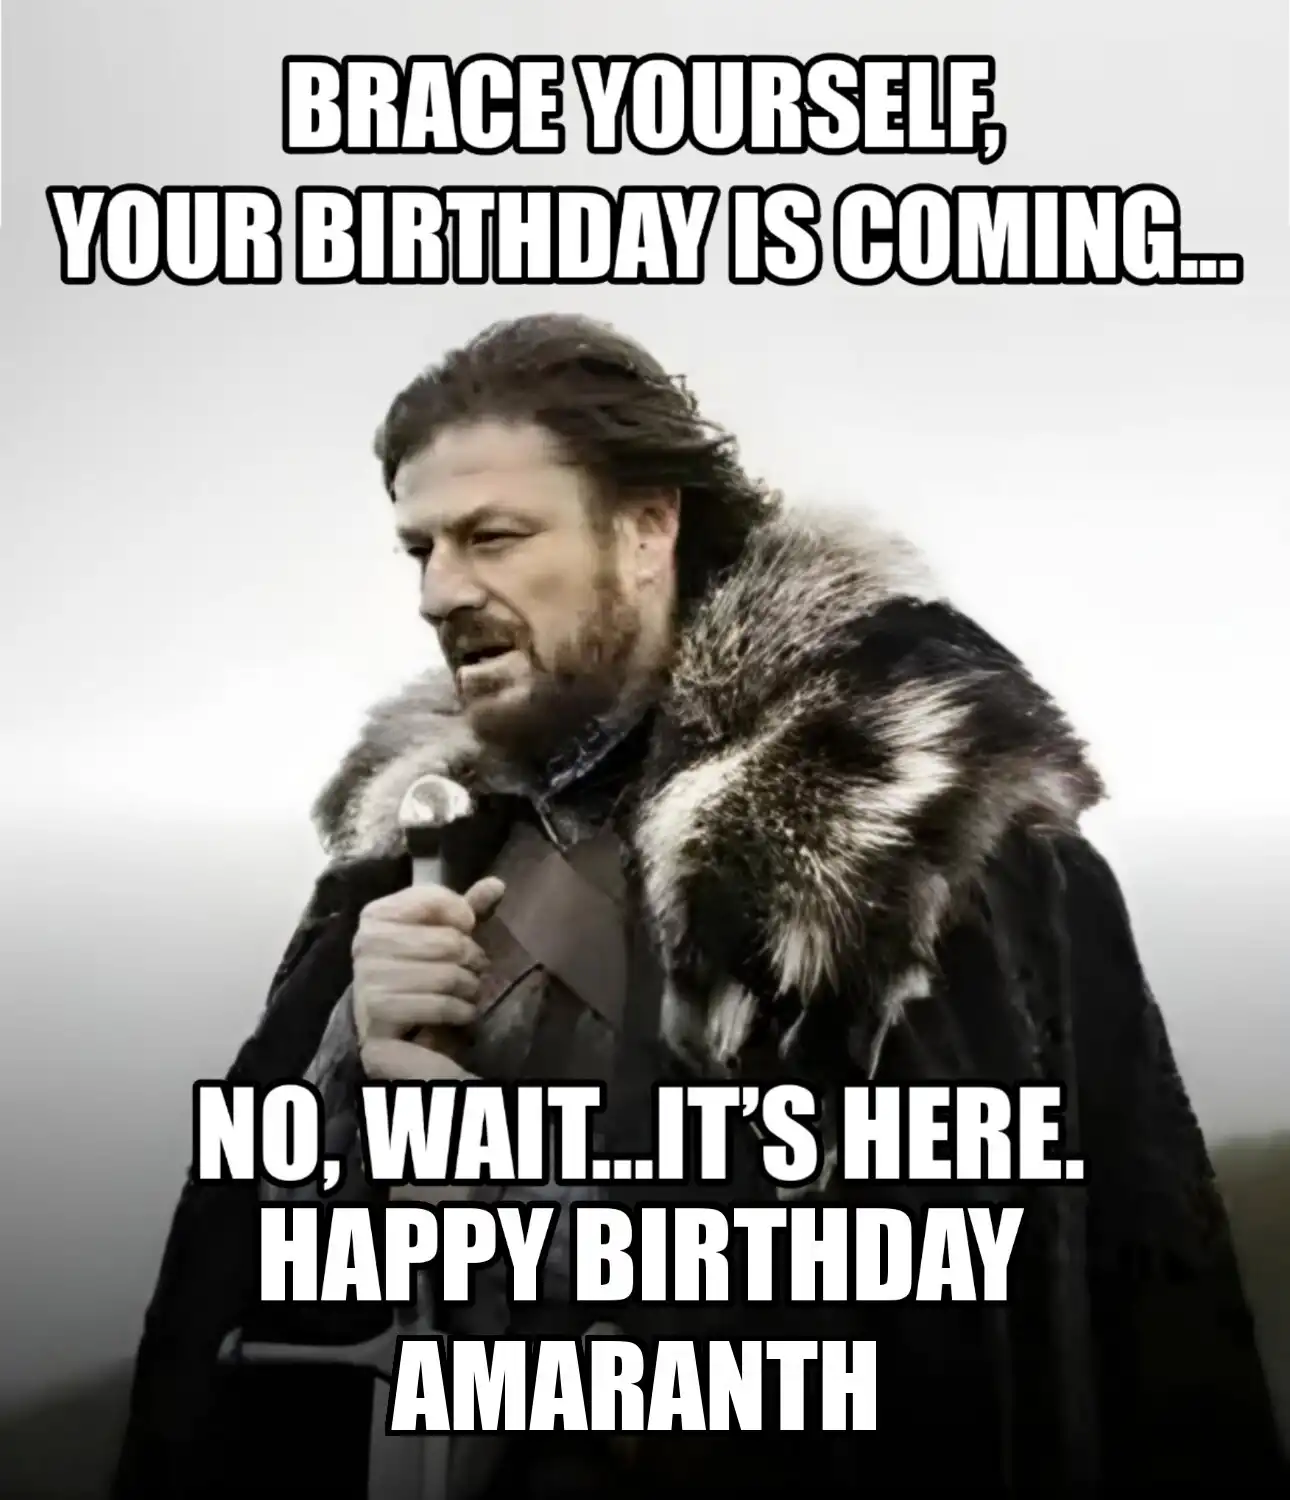 Happy Birthday Amaranth Brace Yourself Your Birthday Is Coming Meme